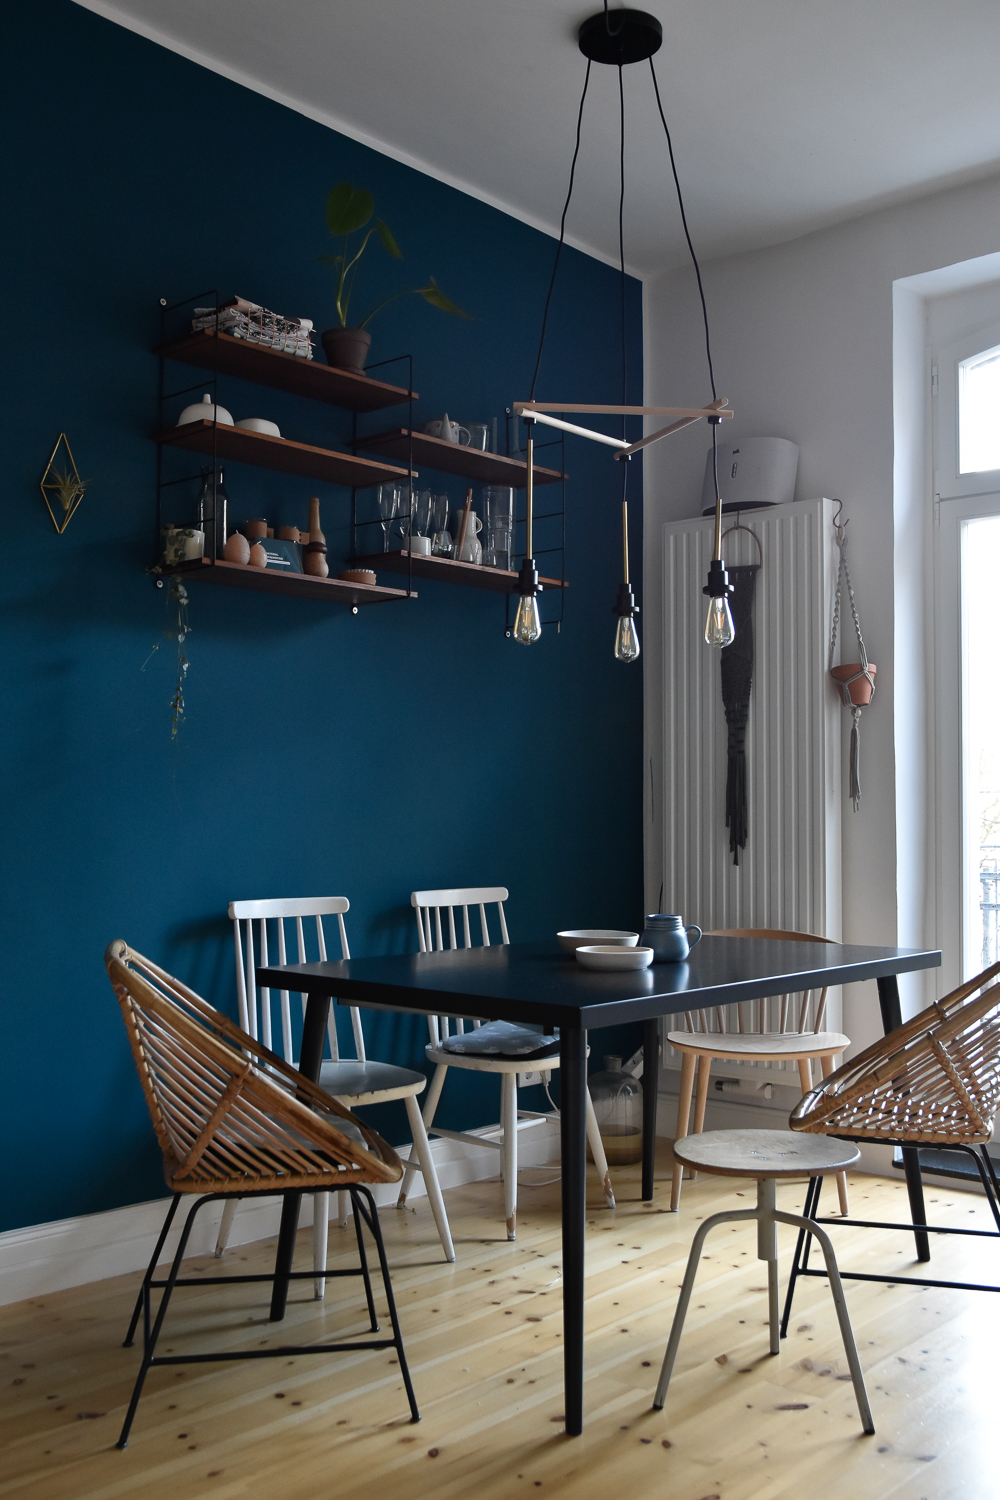 dark blue wall color in the kitchen - www.craftifair.de